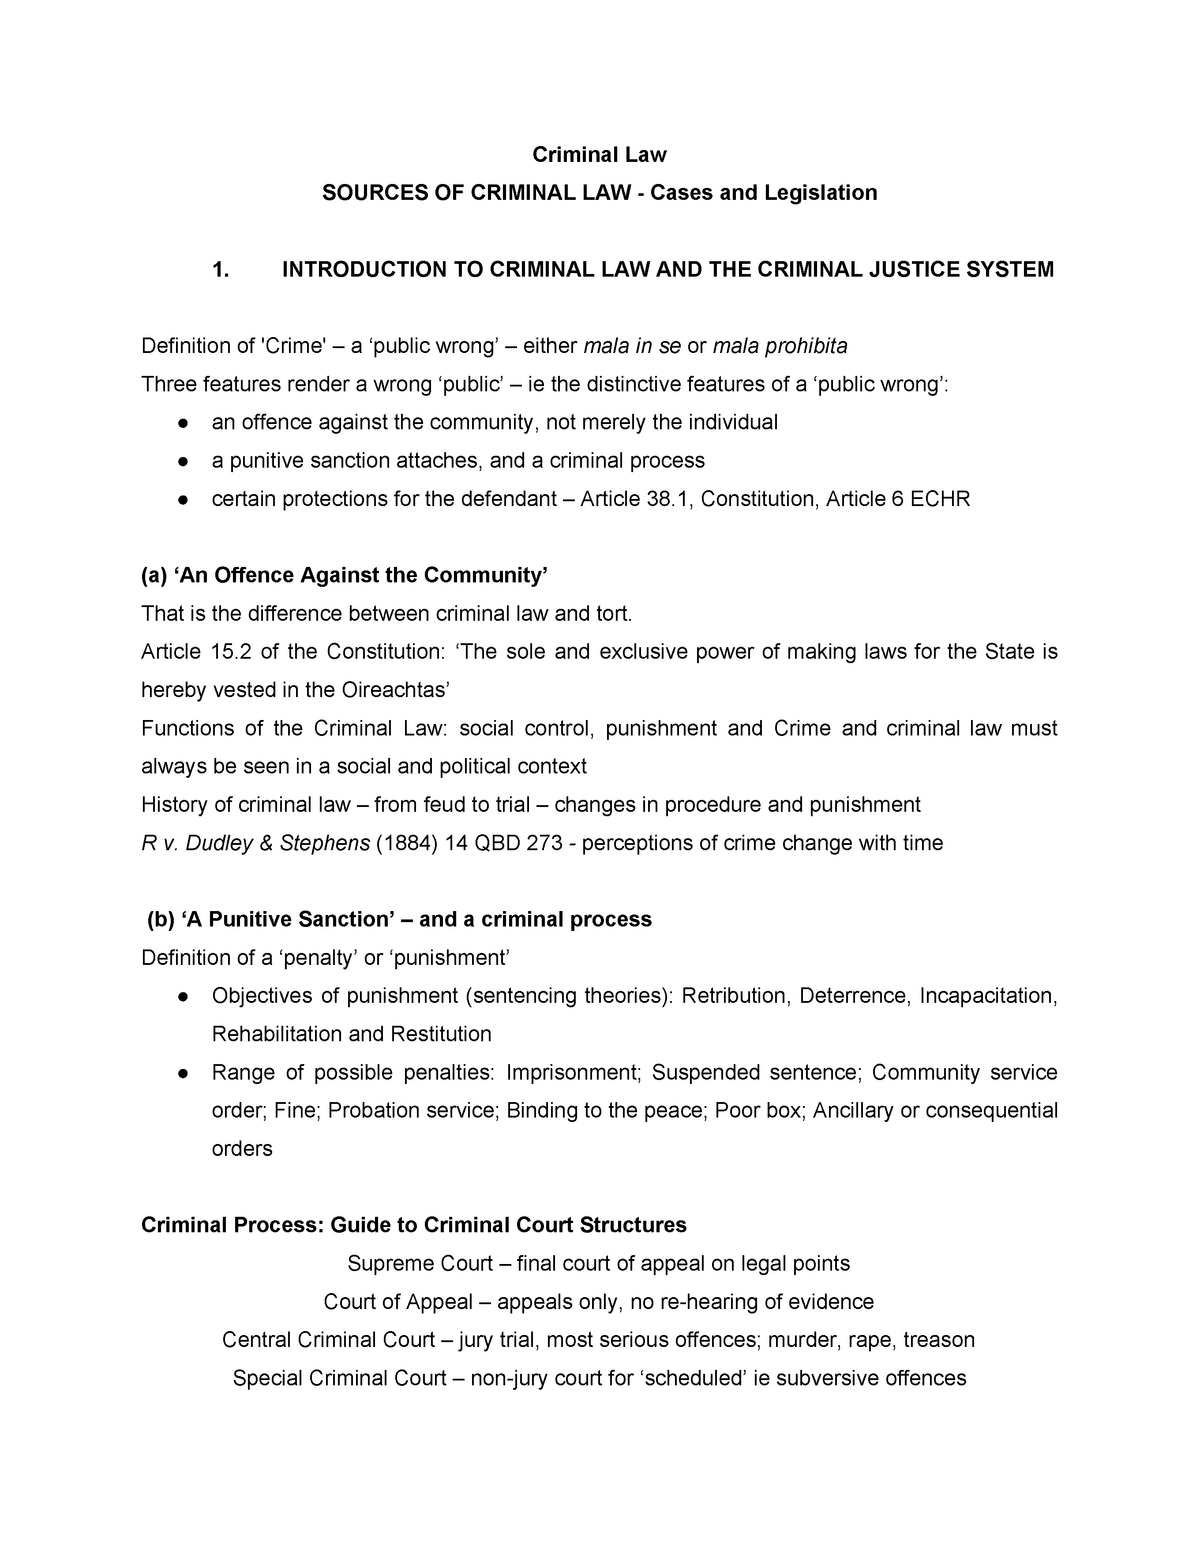 llm dissertation topics in criminal law pdf